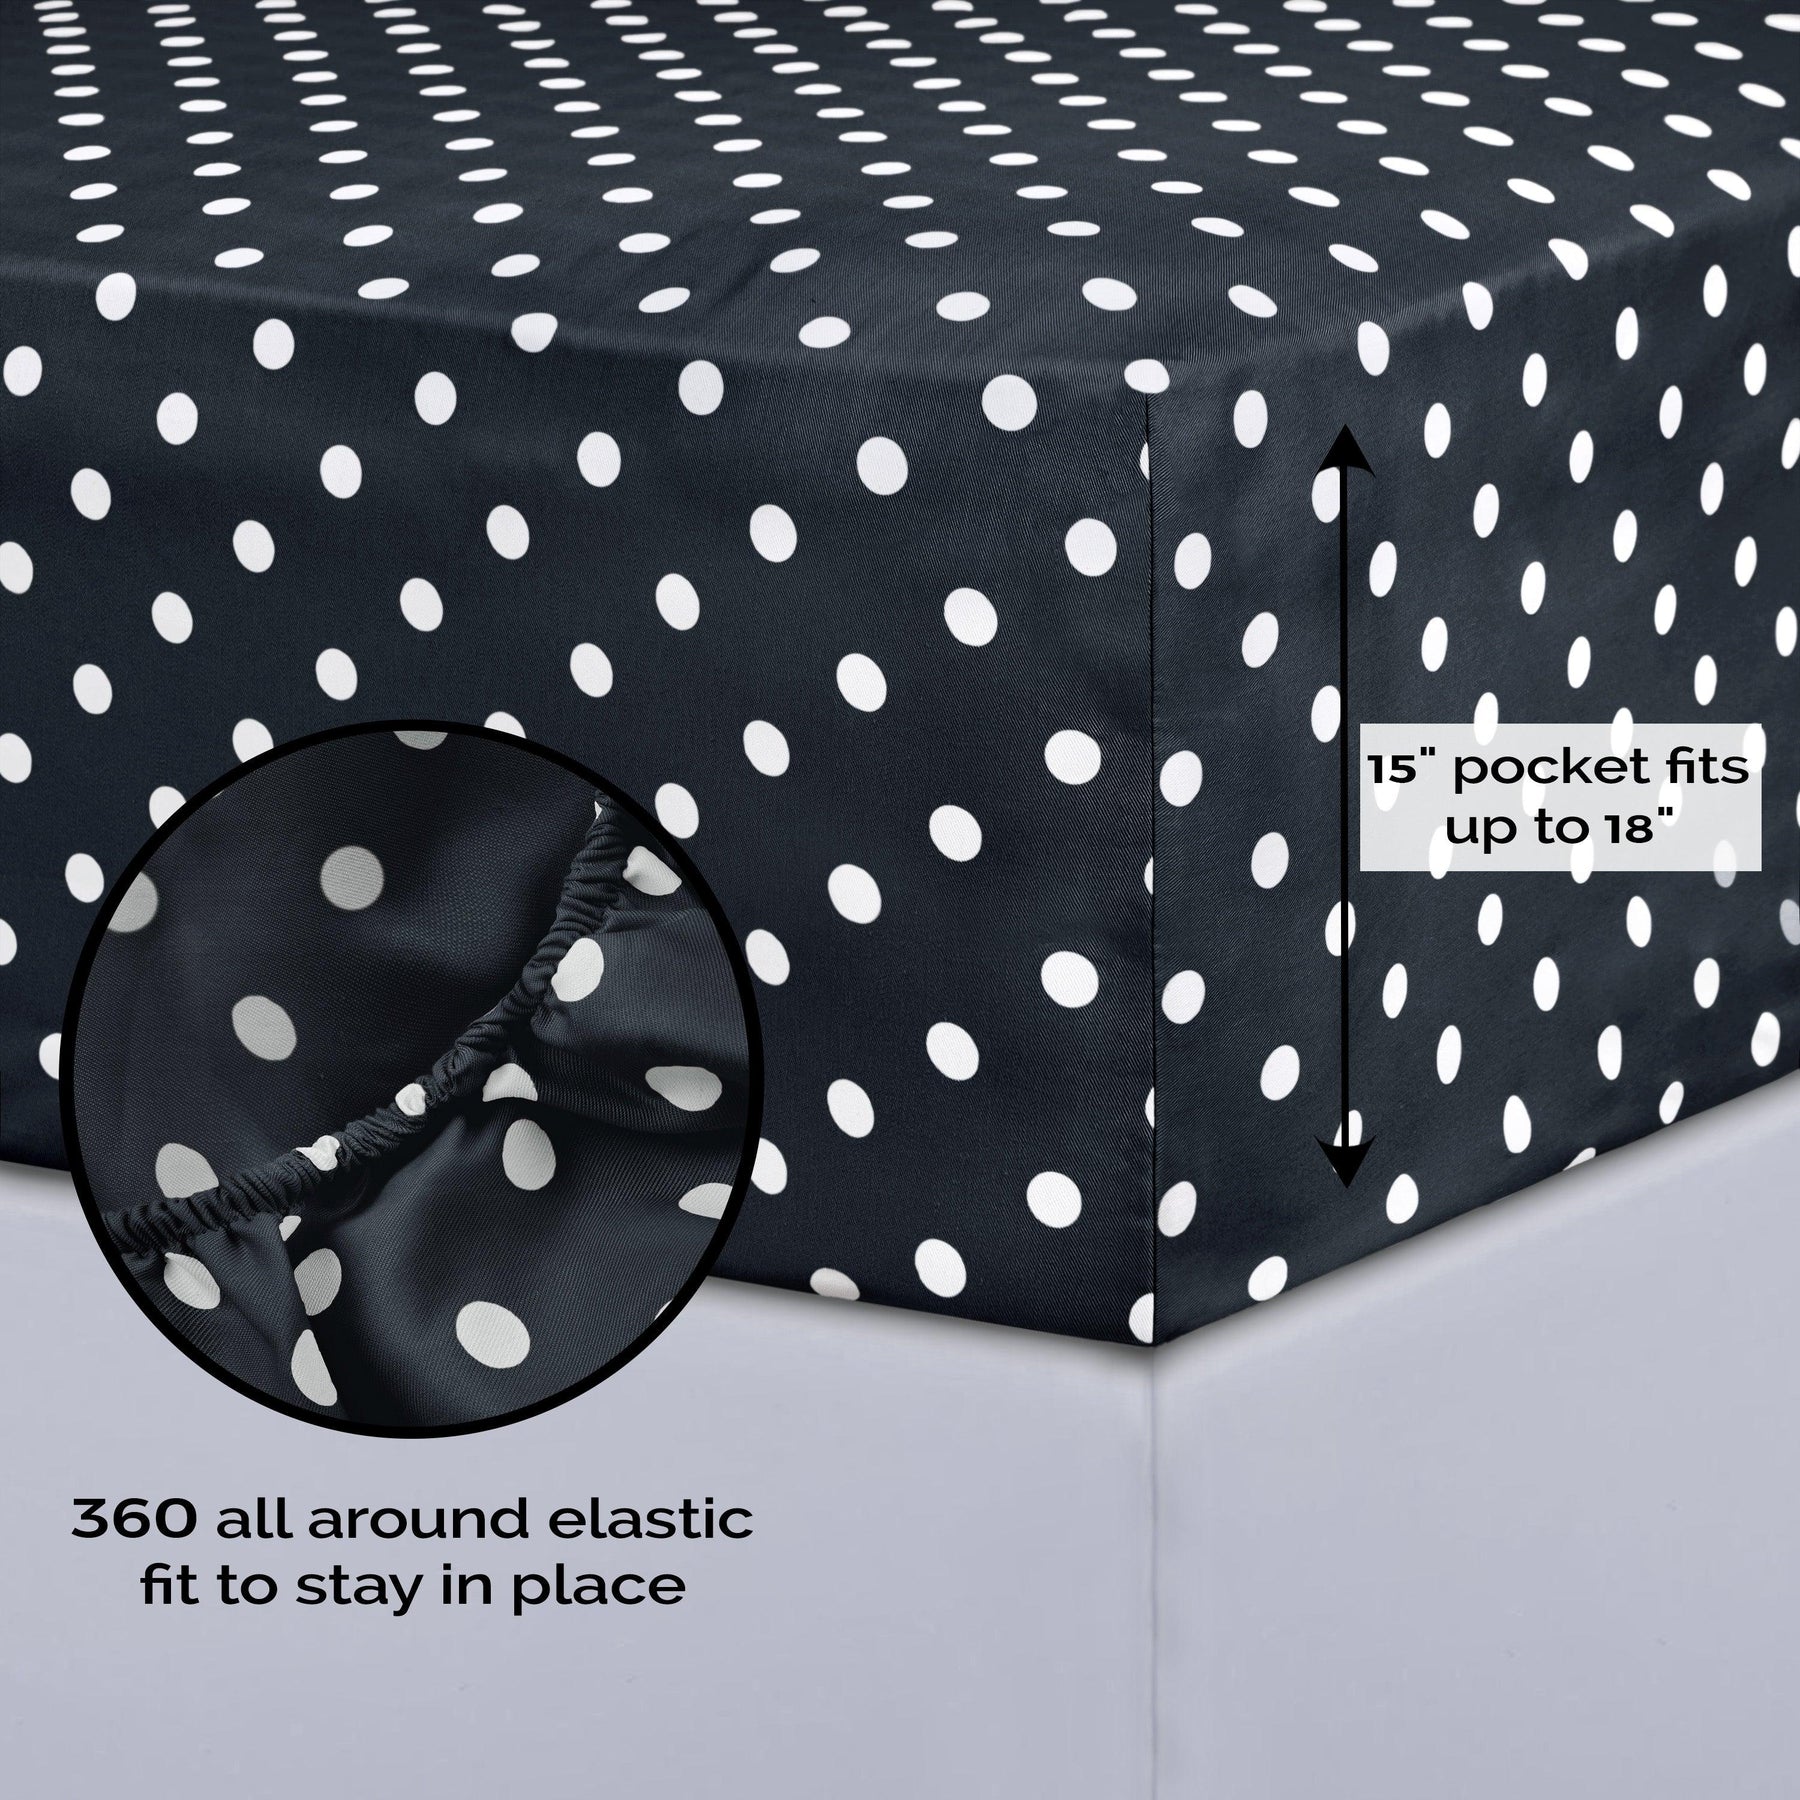 600 Thread Count Cotton Blend Polka Dot Luxury Deep Pocket Retro Bed Sheet Set - Black